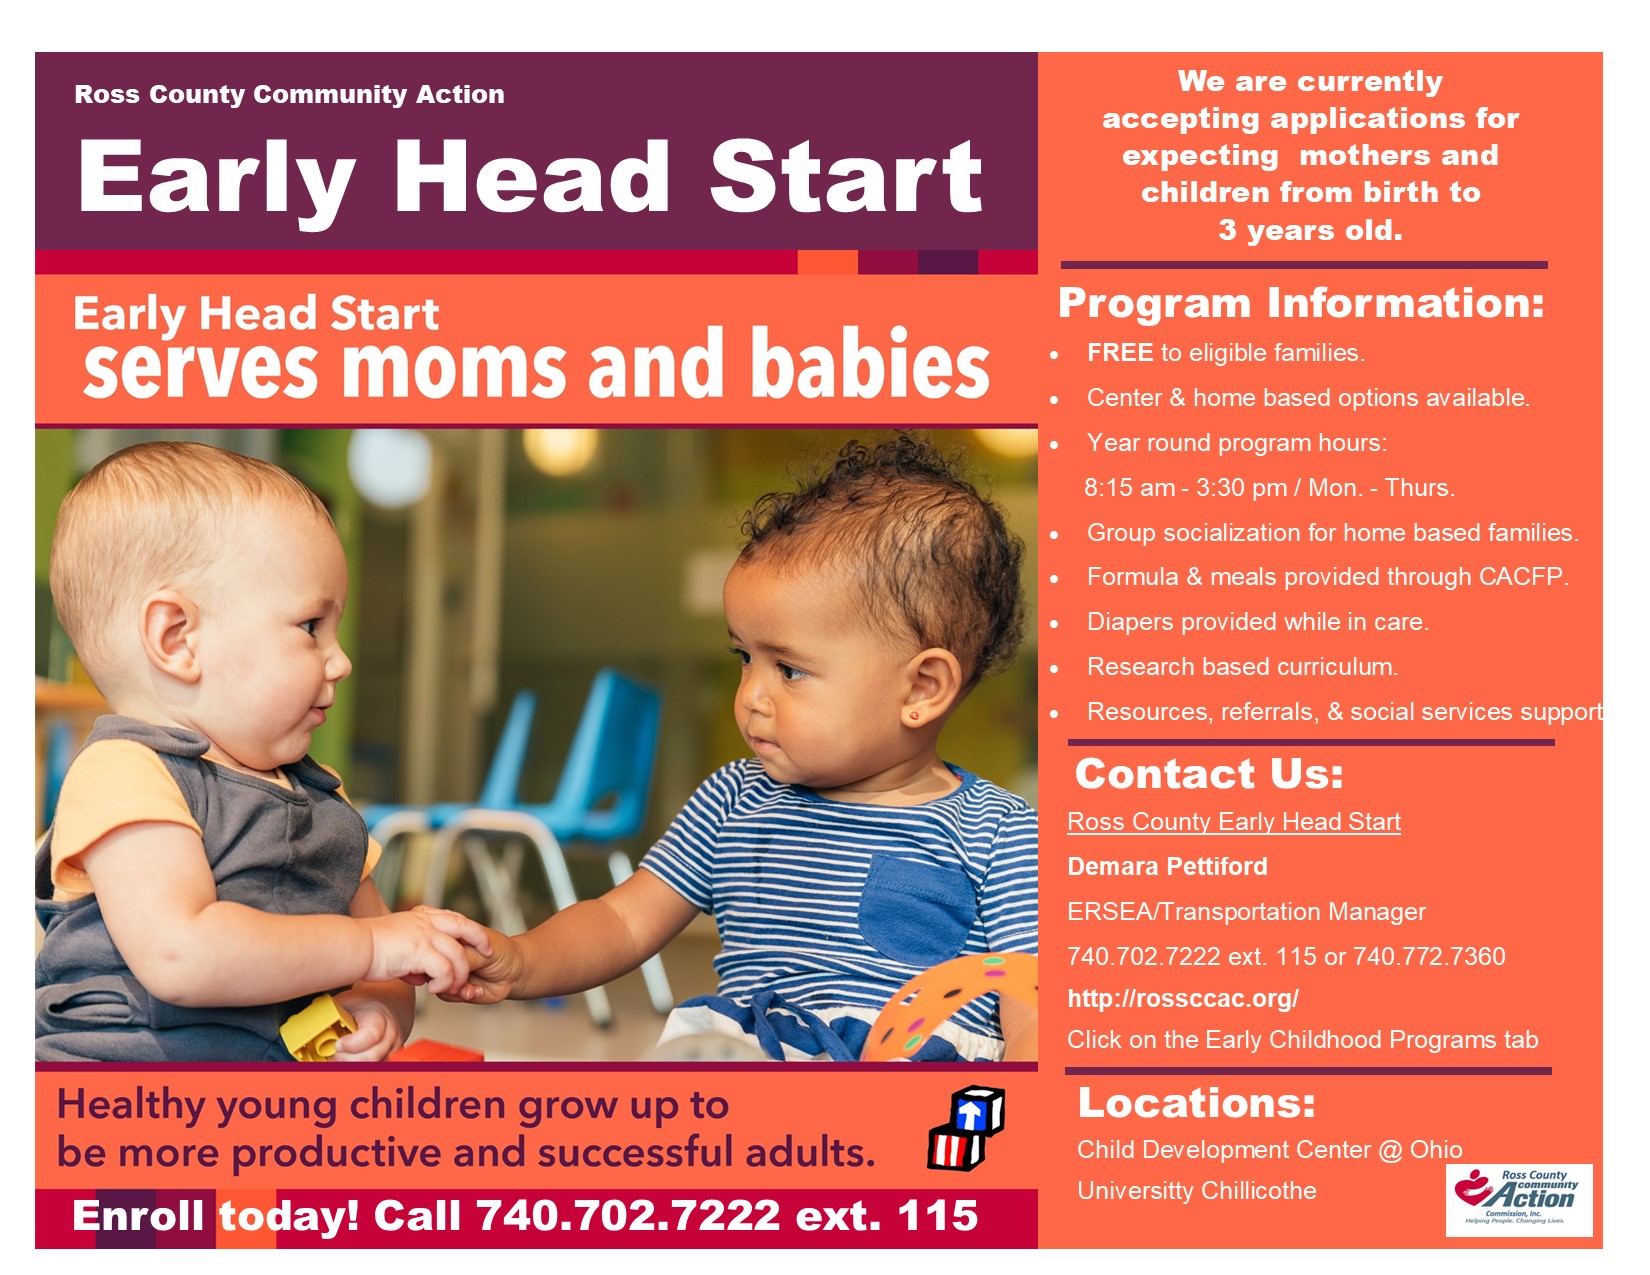 Head Start and Early Head Start